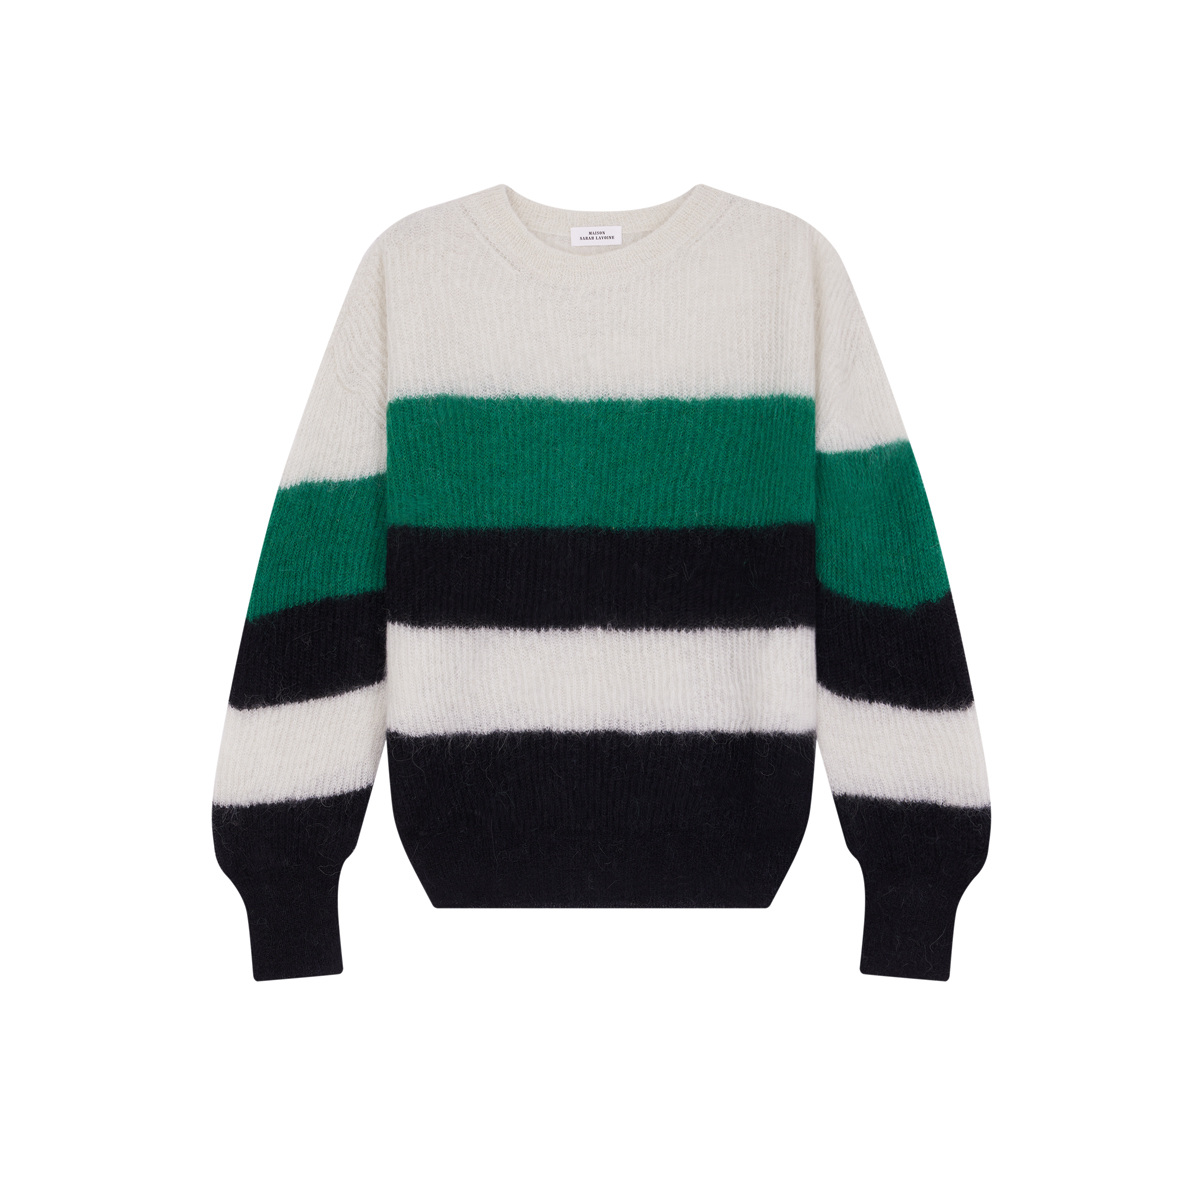 Sweater Torino, Round neck - Ecru, Green and Black - Mohair et Alpaga - image 1